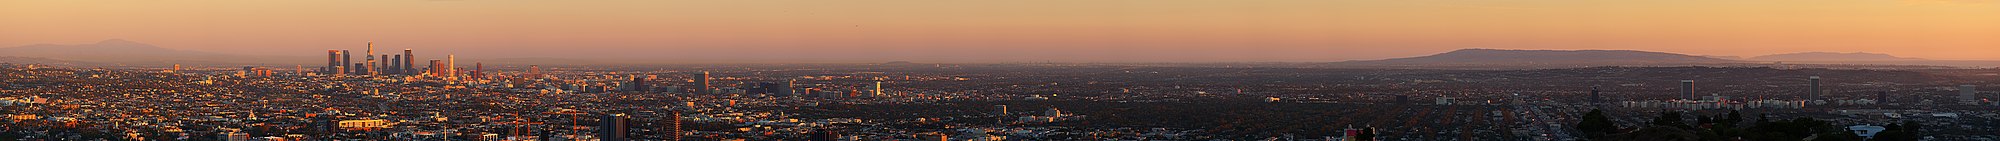 Los Angeleseko ikuspegi panoramikoa.